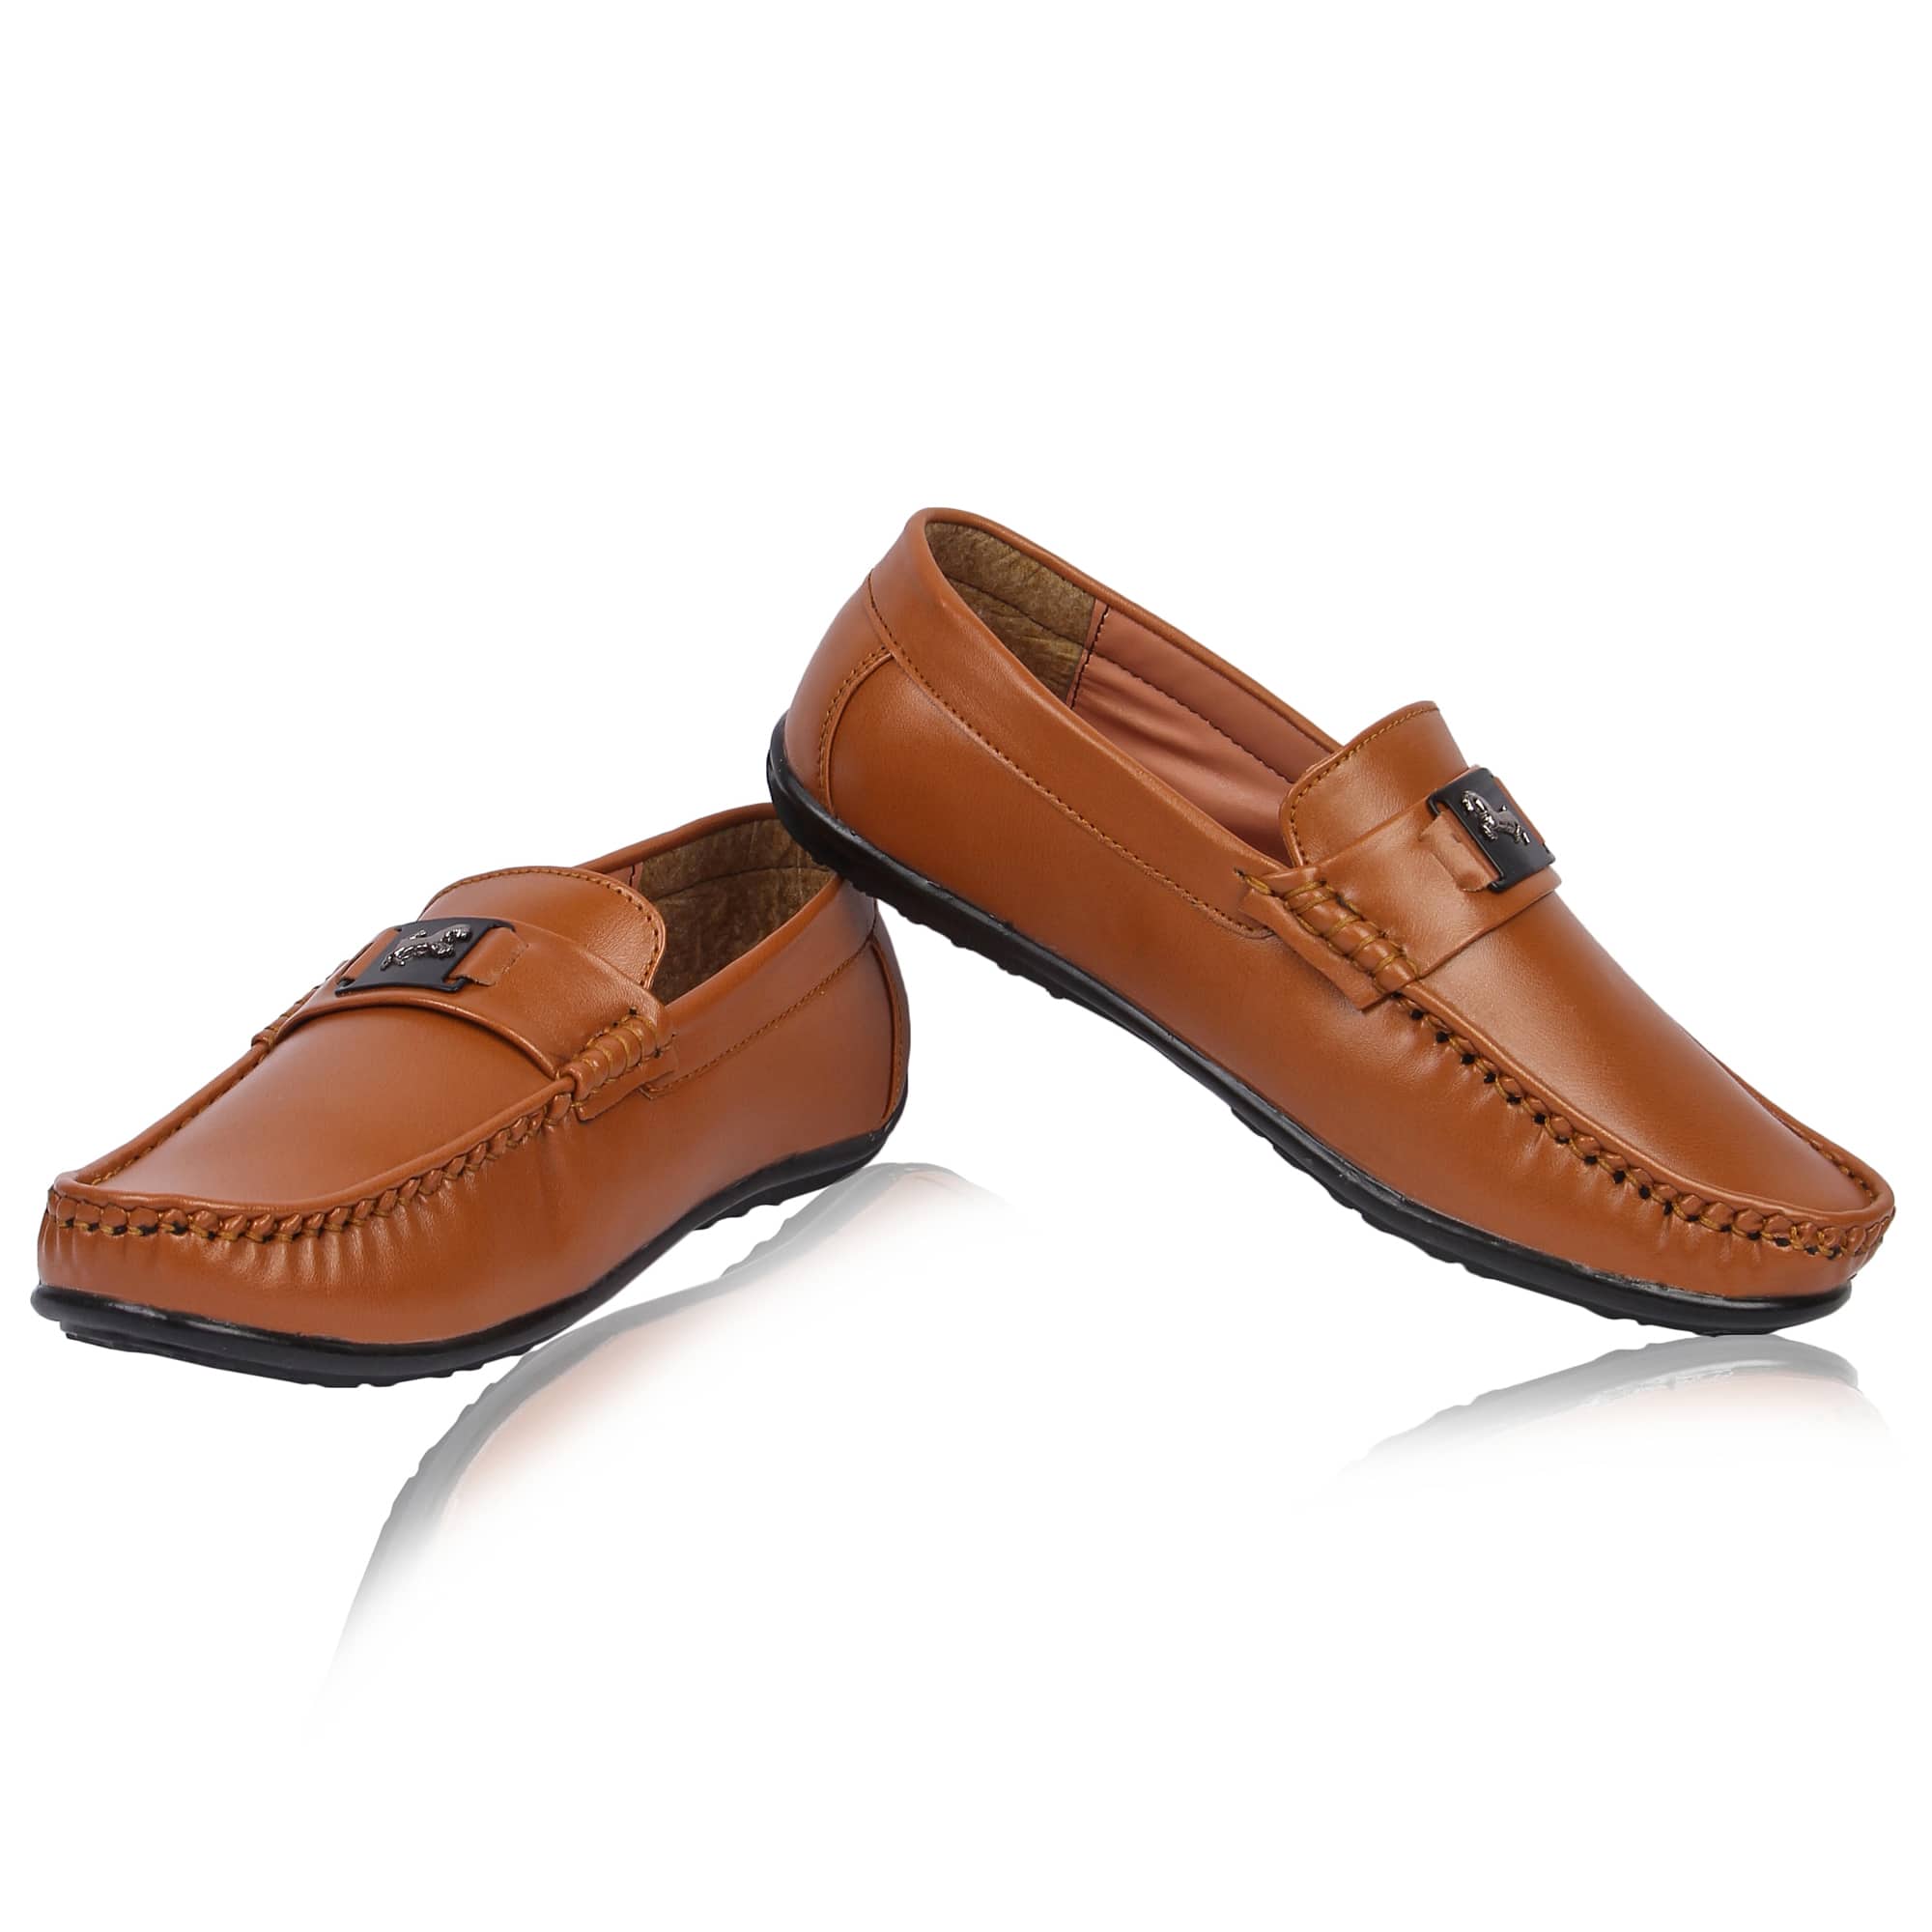 IMG_0213-min | Online Store for Men Footwear in India